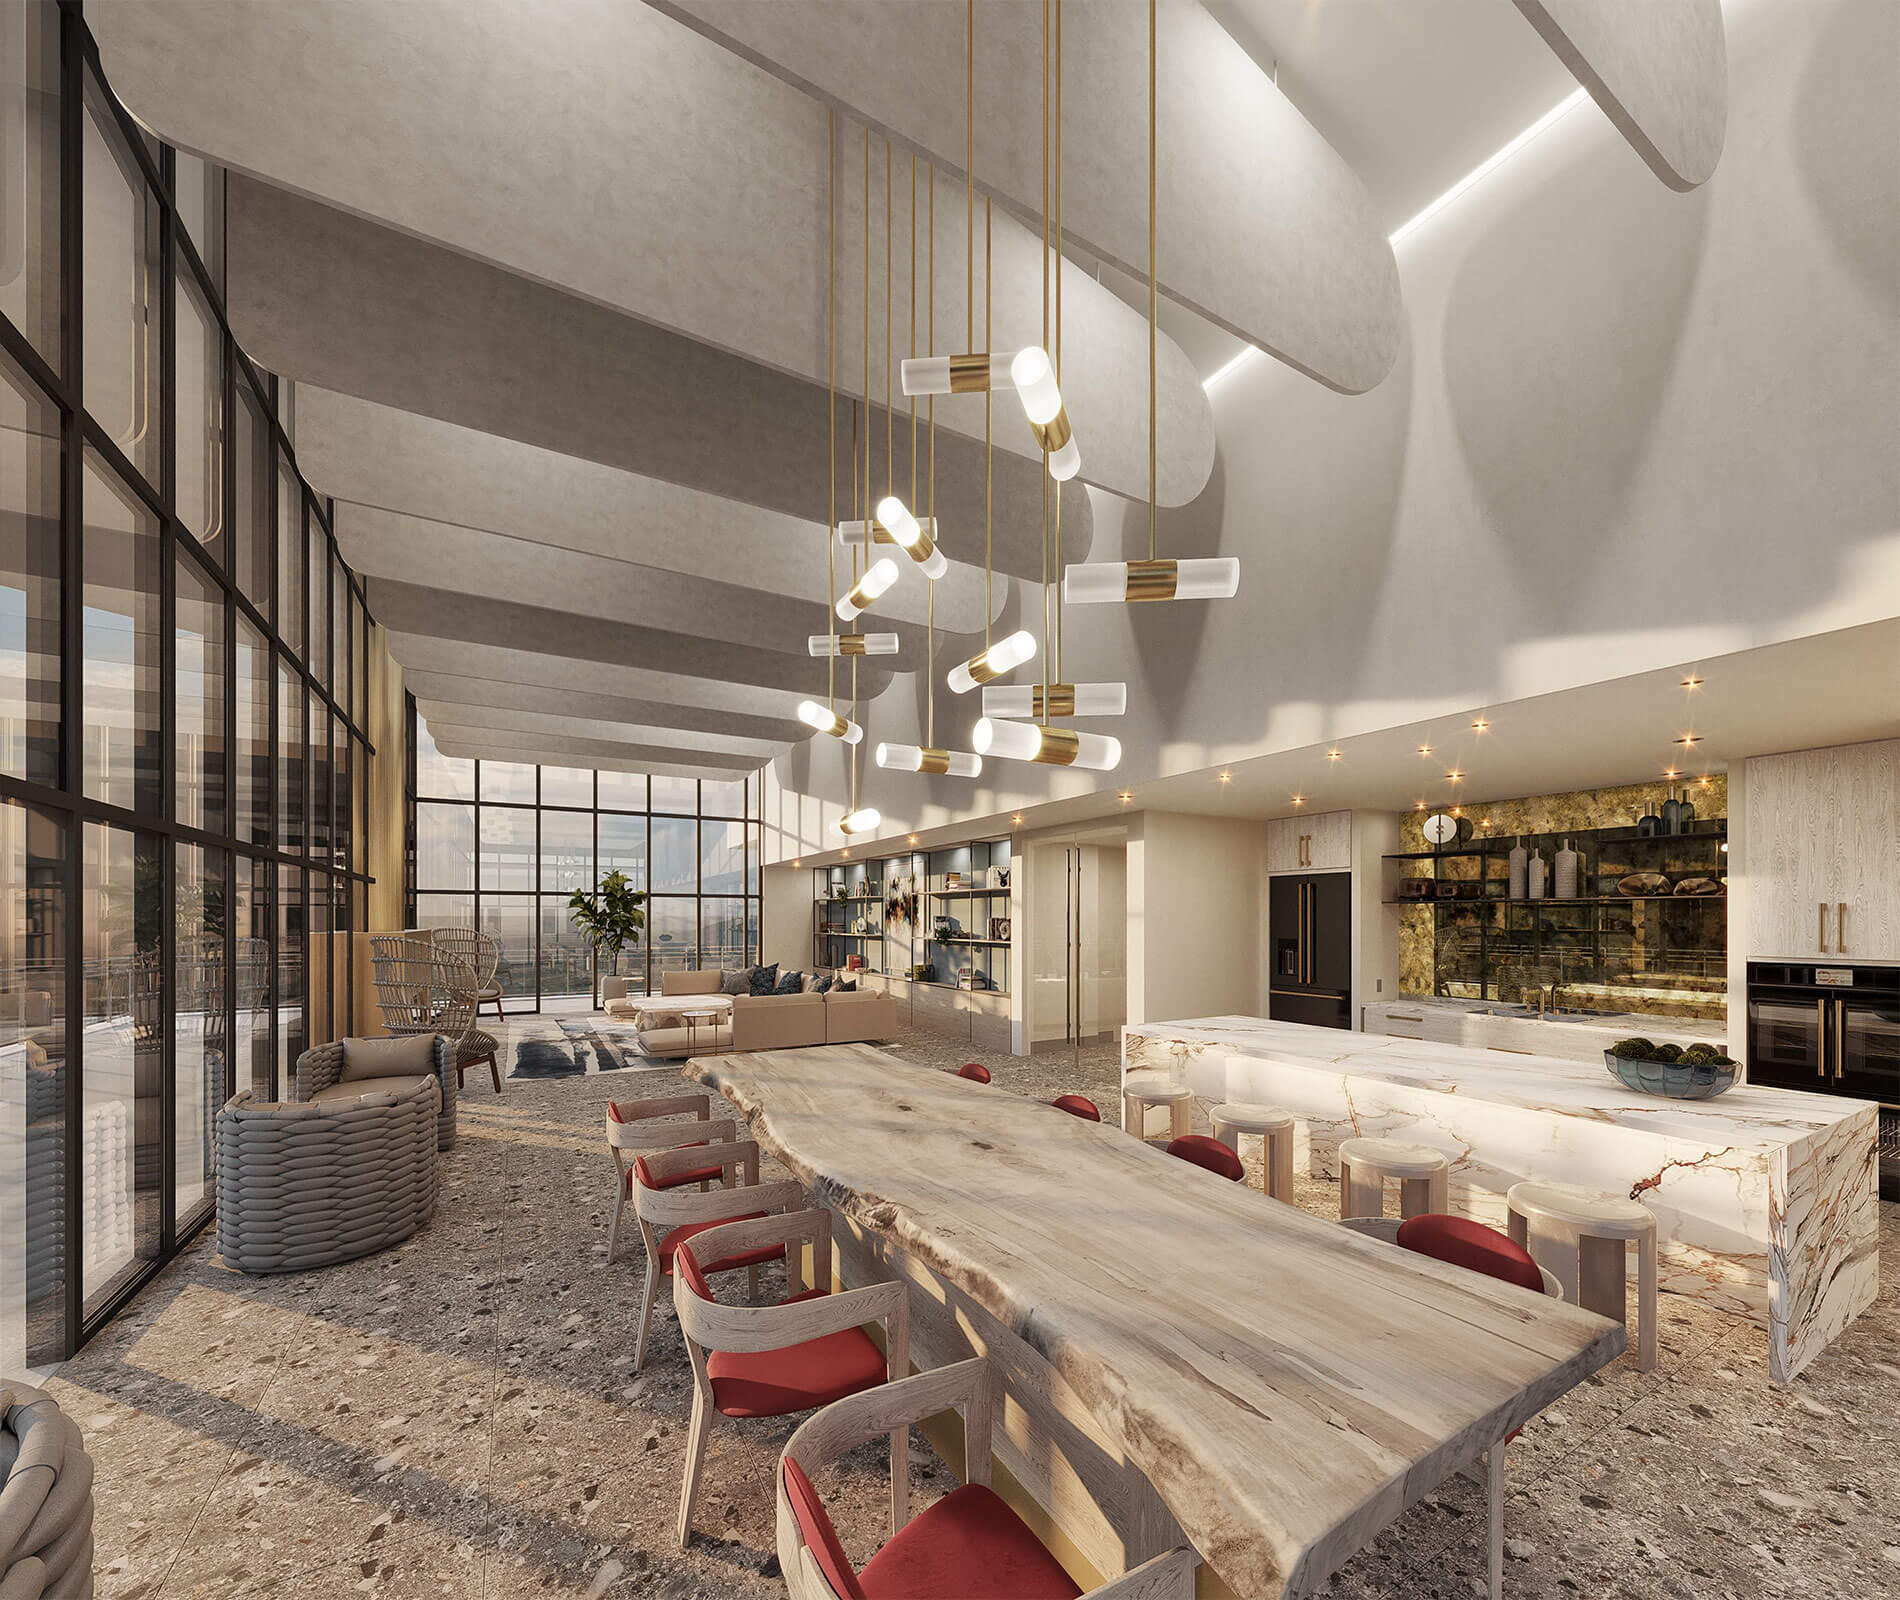 101 N. Meridian sky deck lounge and kitchen rendering